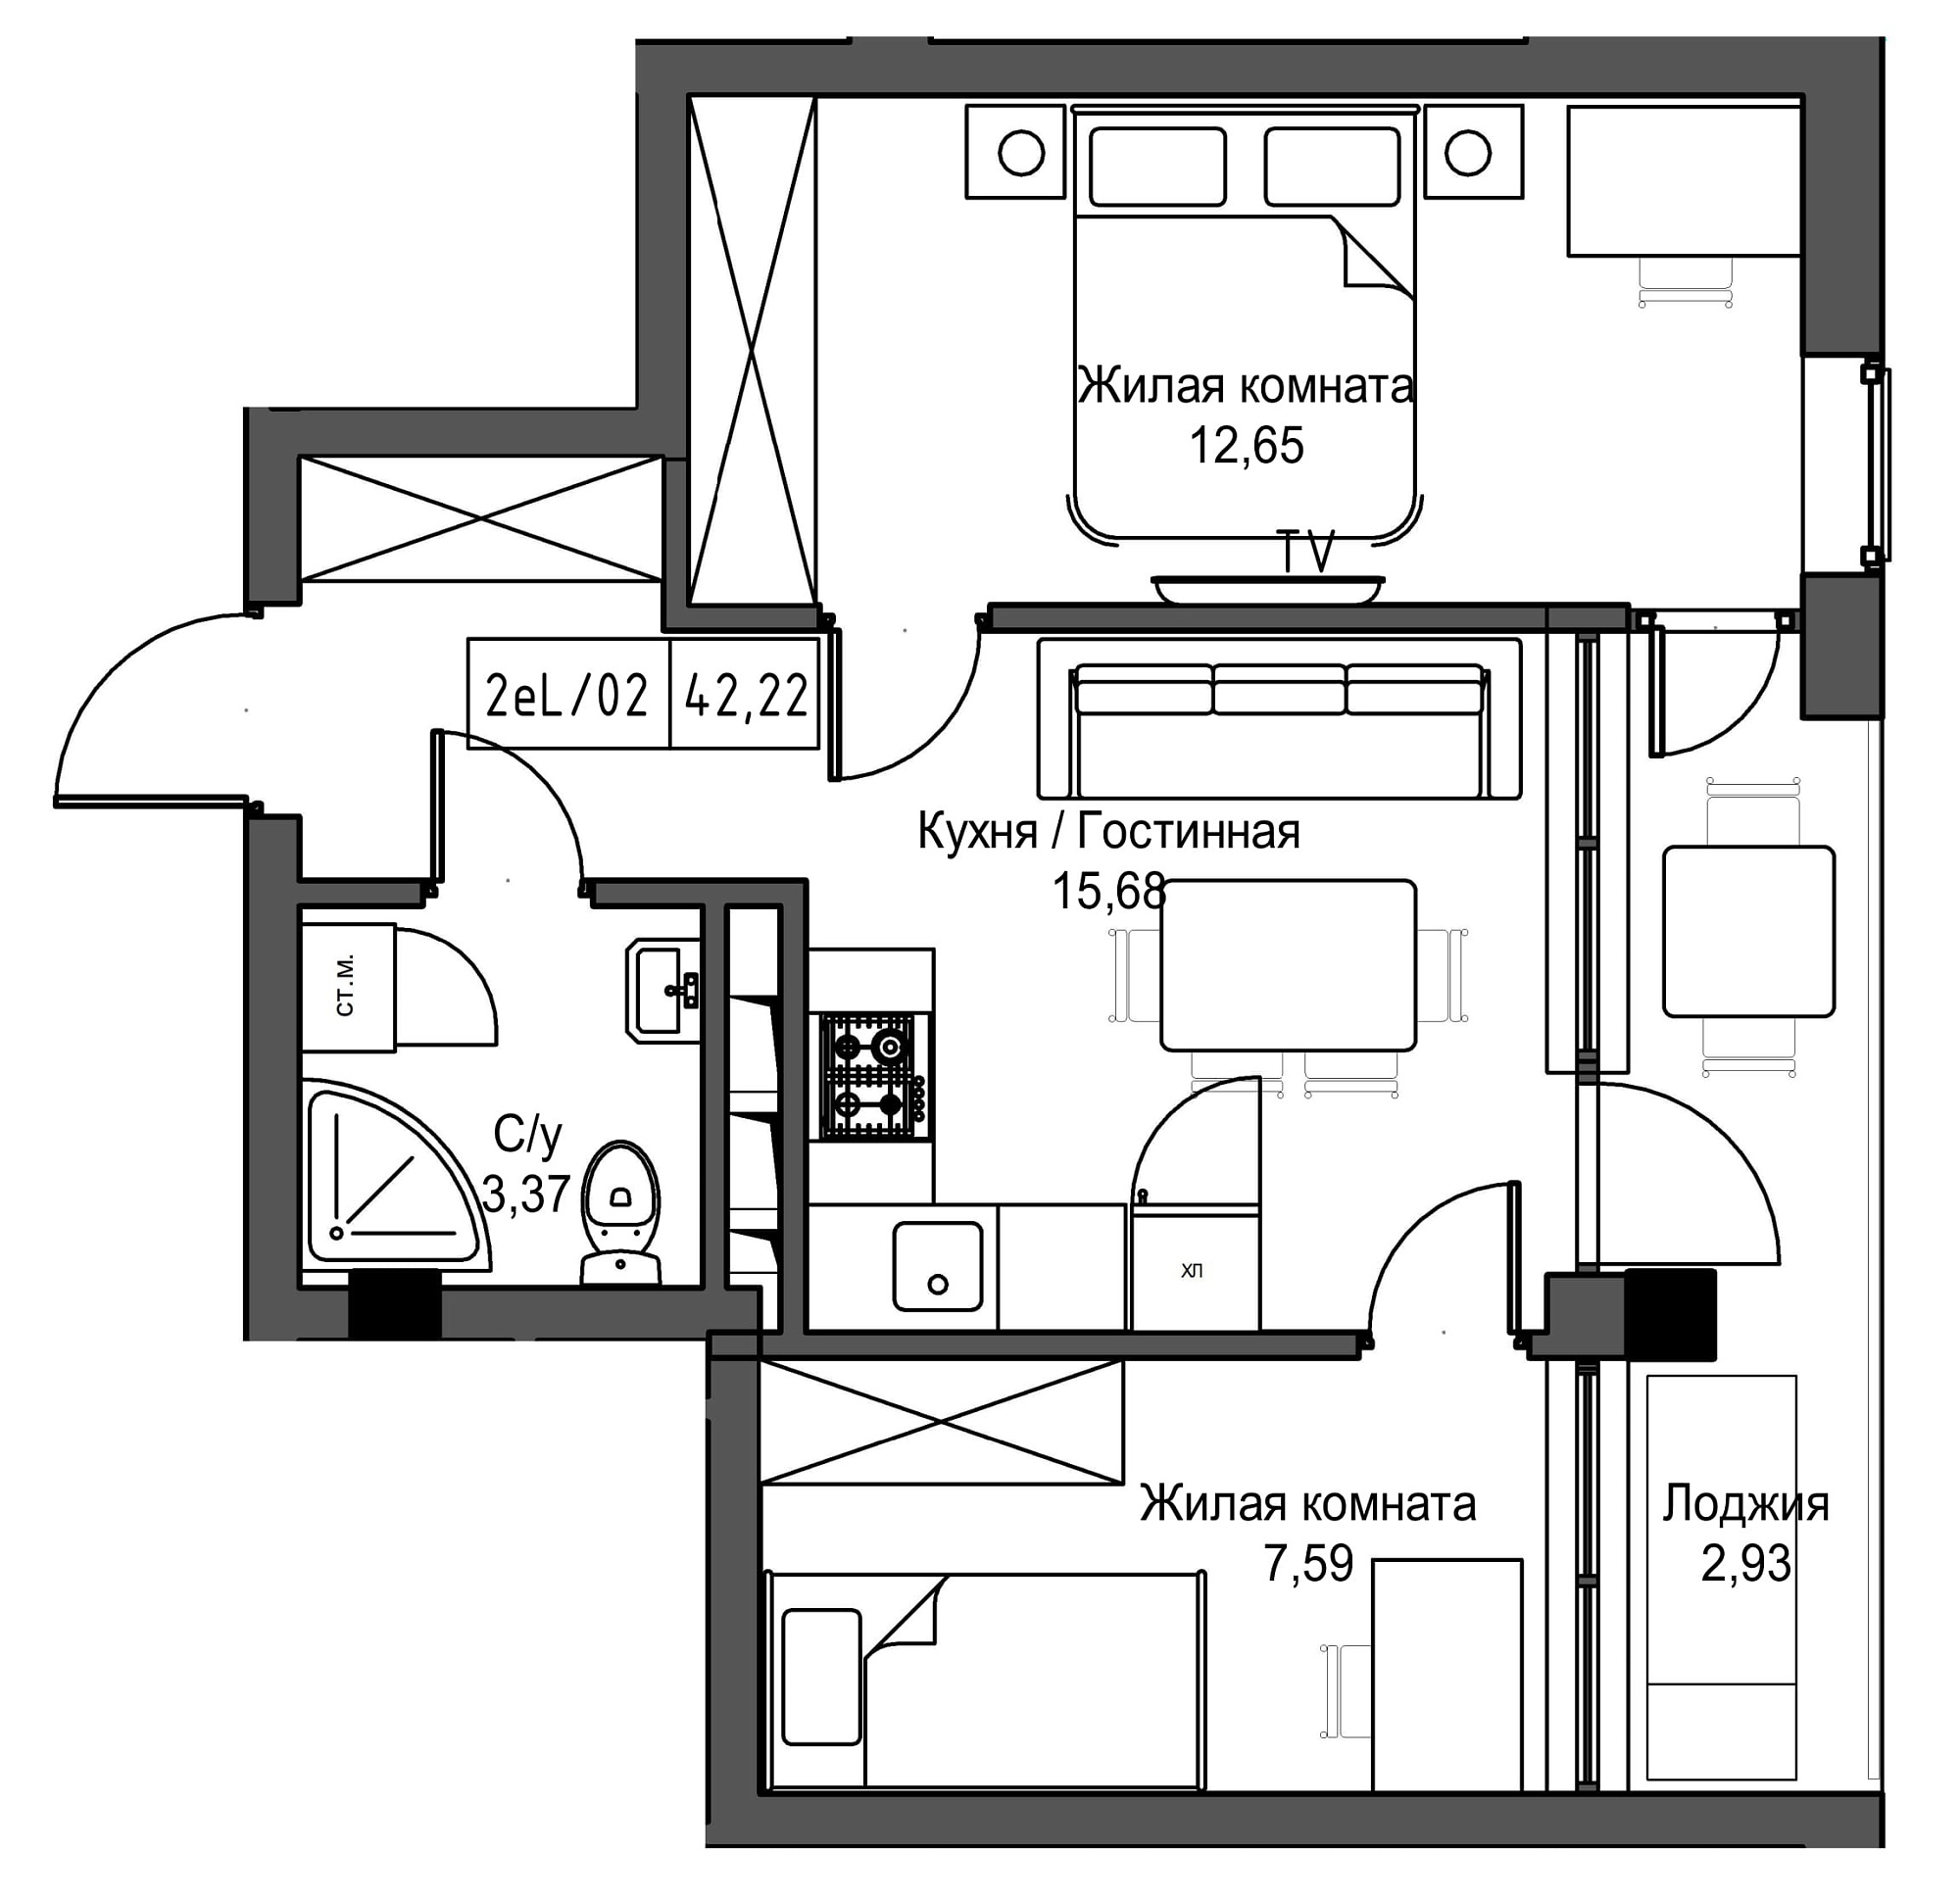 Планування 2-к квартира площею 42.22м2, UM-002-08/0072.